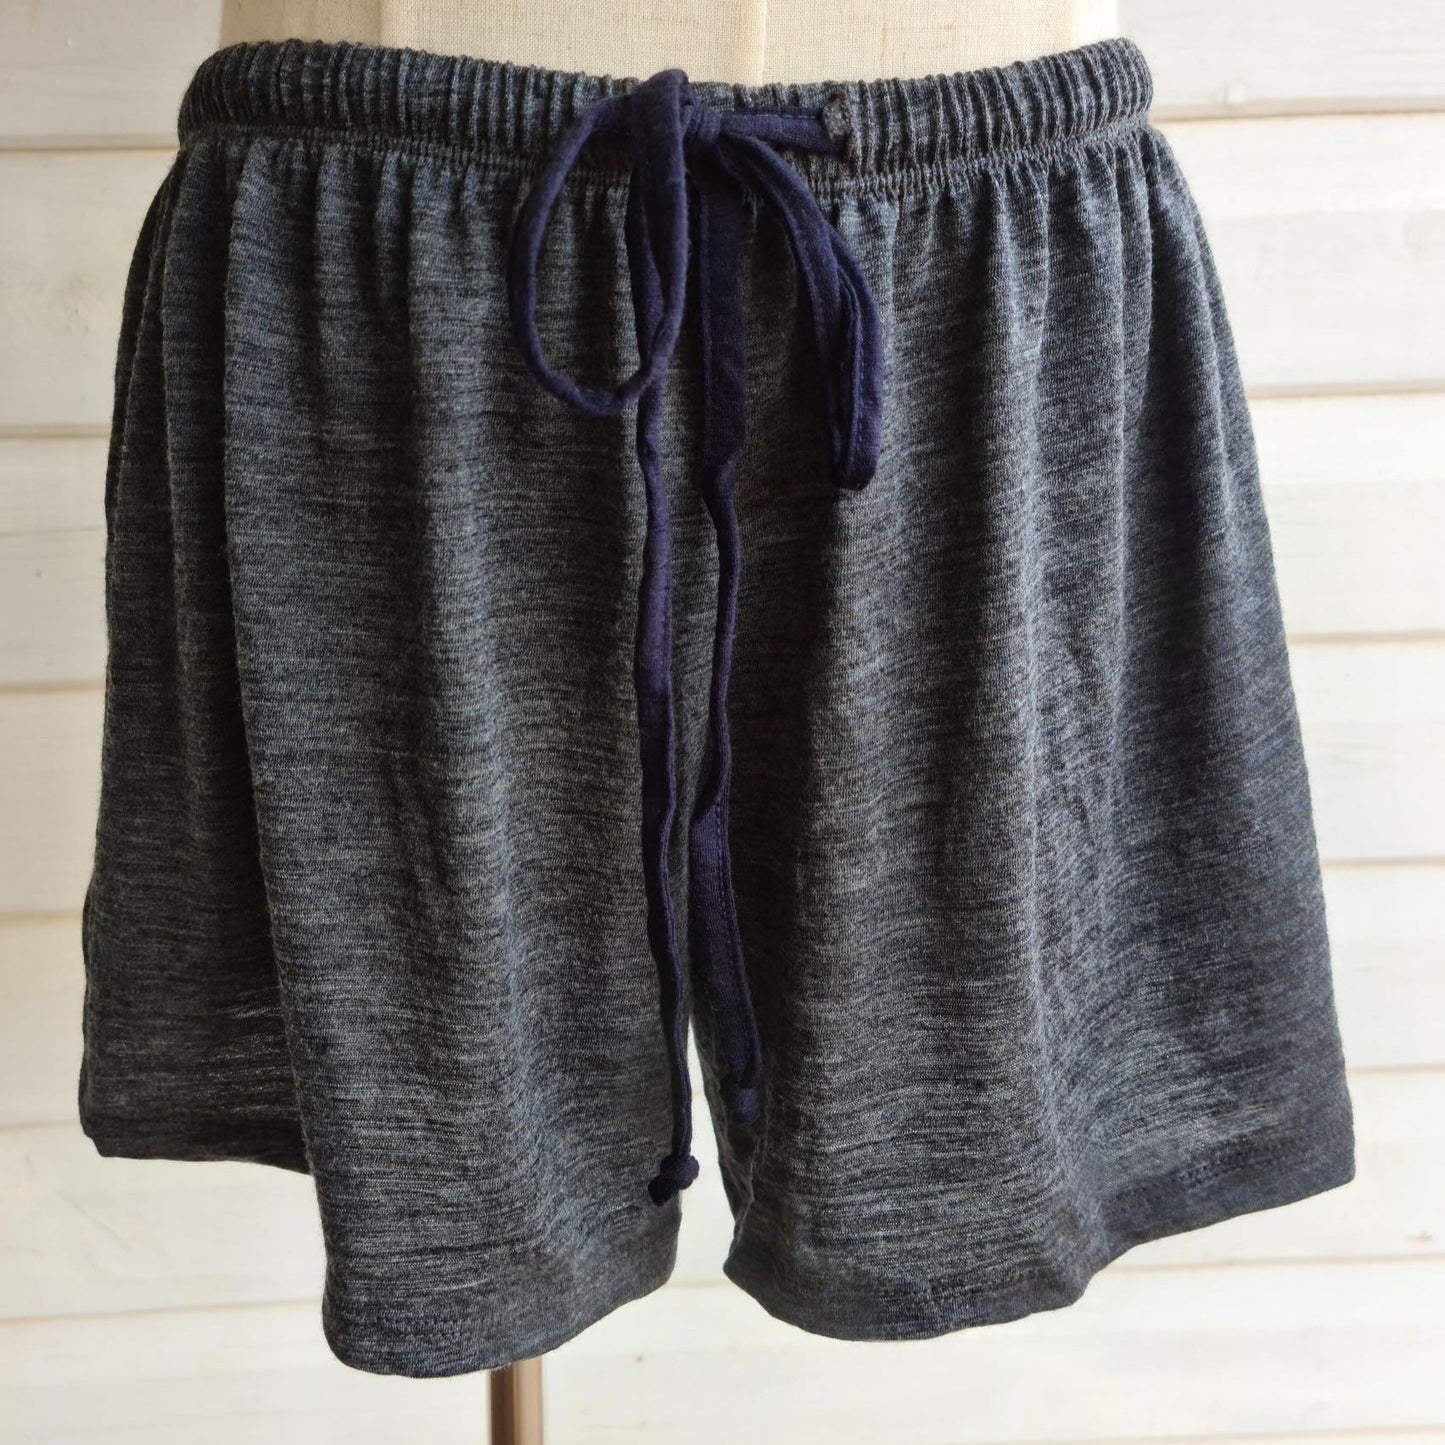 Women's Sleep Shorts | 100% Merino Wool Charcoal- Navy Tie